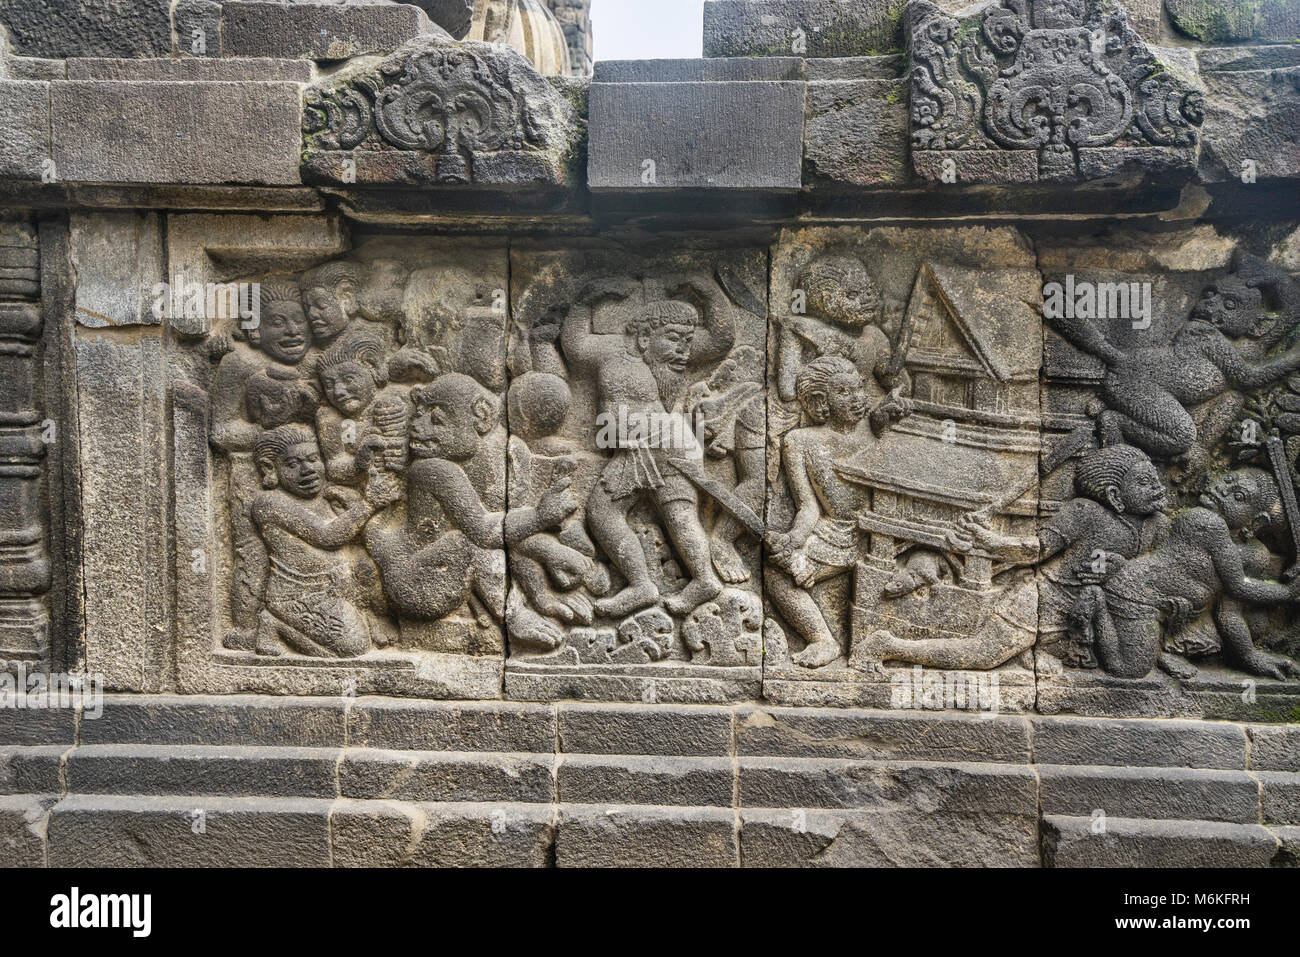 Indonesien, Central Java, bas-relief Galerien entlang der Balustraden Der Shiva Tempel in der Mitte des 9. Jahrhunderts Hindu Tempel Prambanan Komplex Stockfoto